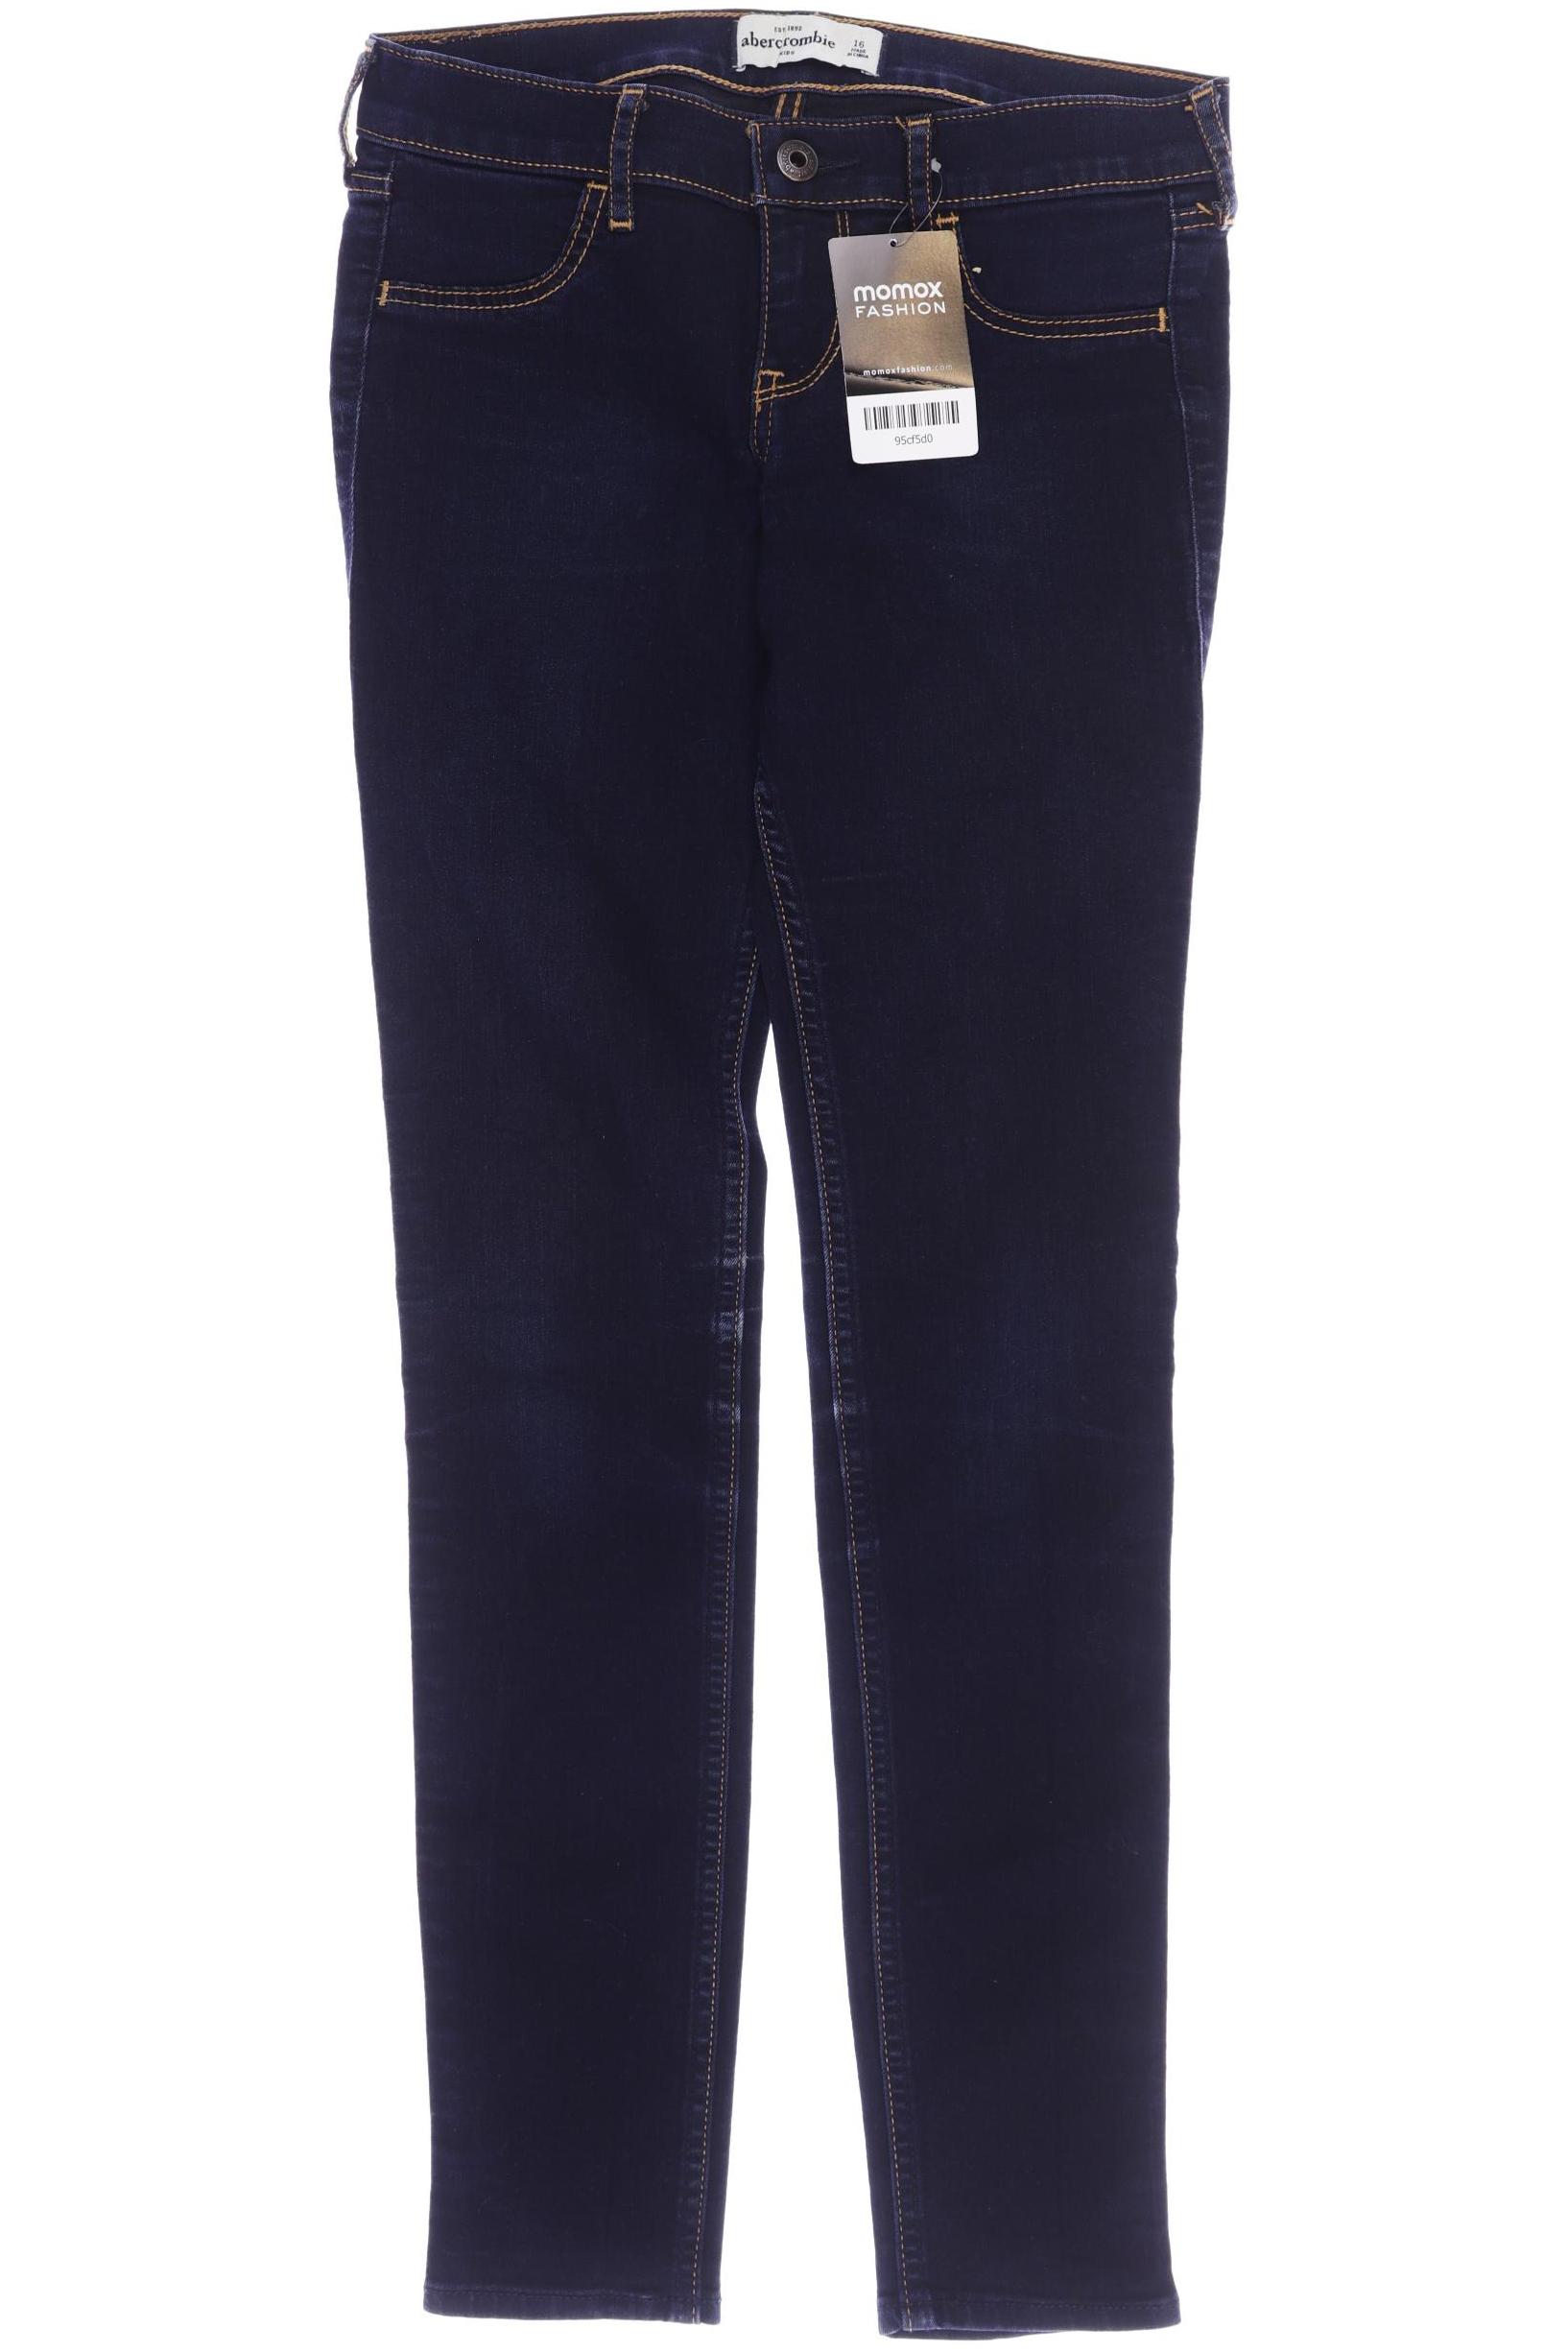 Abercrombie & Fitch Damen Jeans, marineblau, Gr. 176 von Abercrombie & Fitch